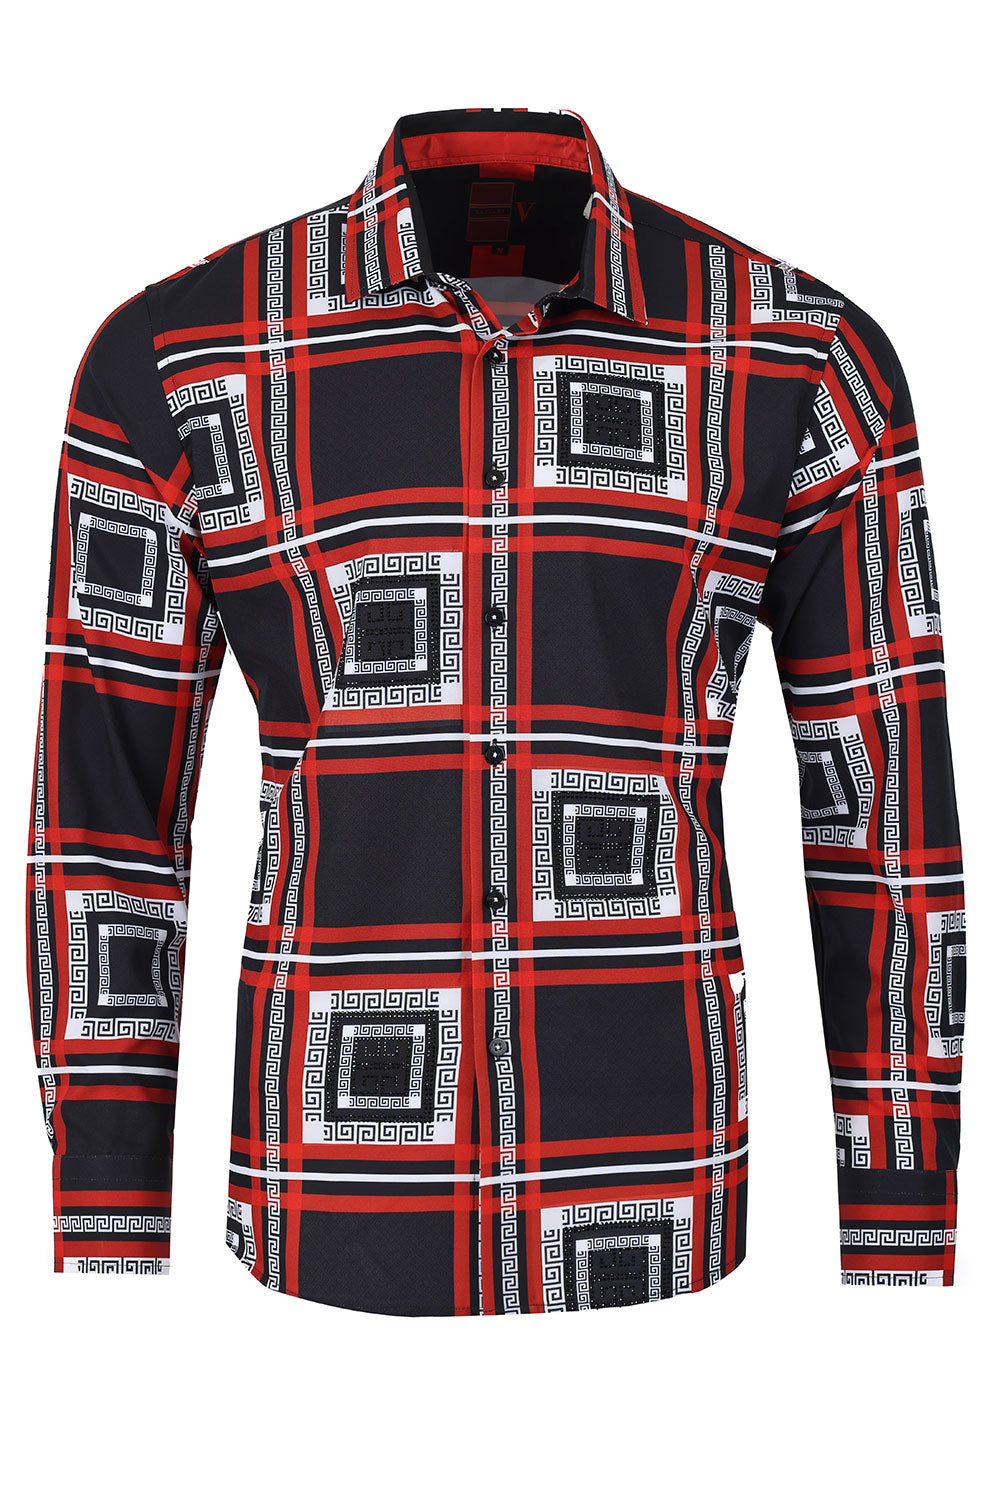 Vassari Men's Printed Checkered Plaid Long Sleeve Shirts VSR175